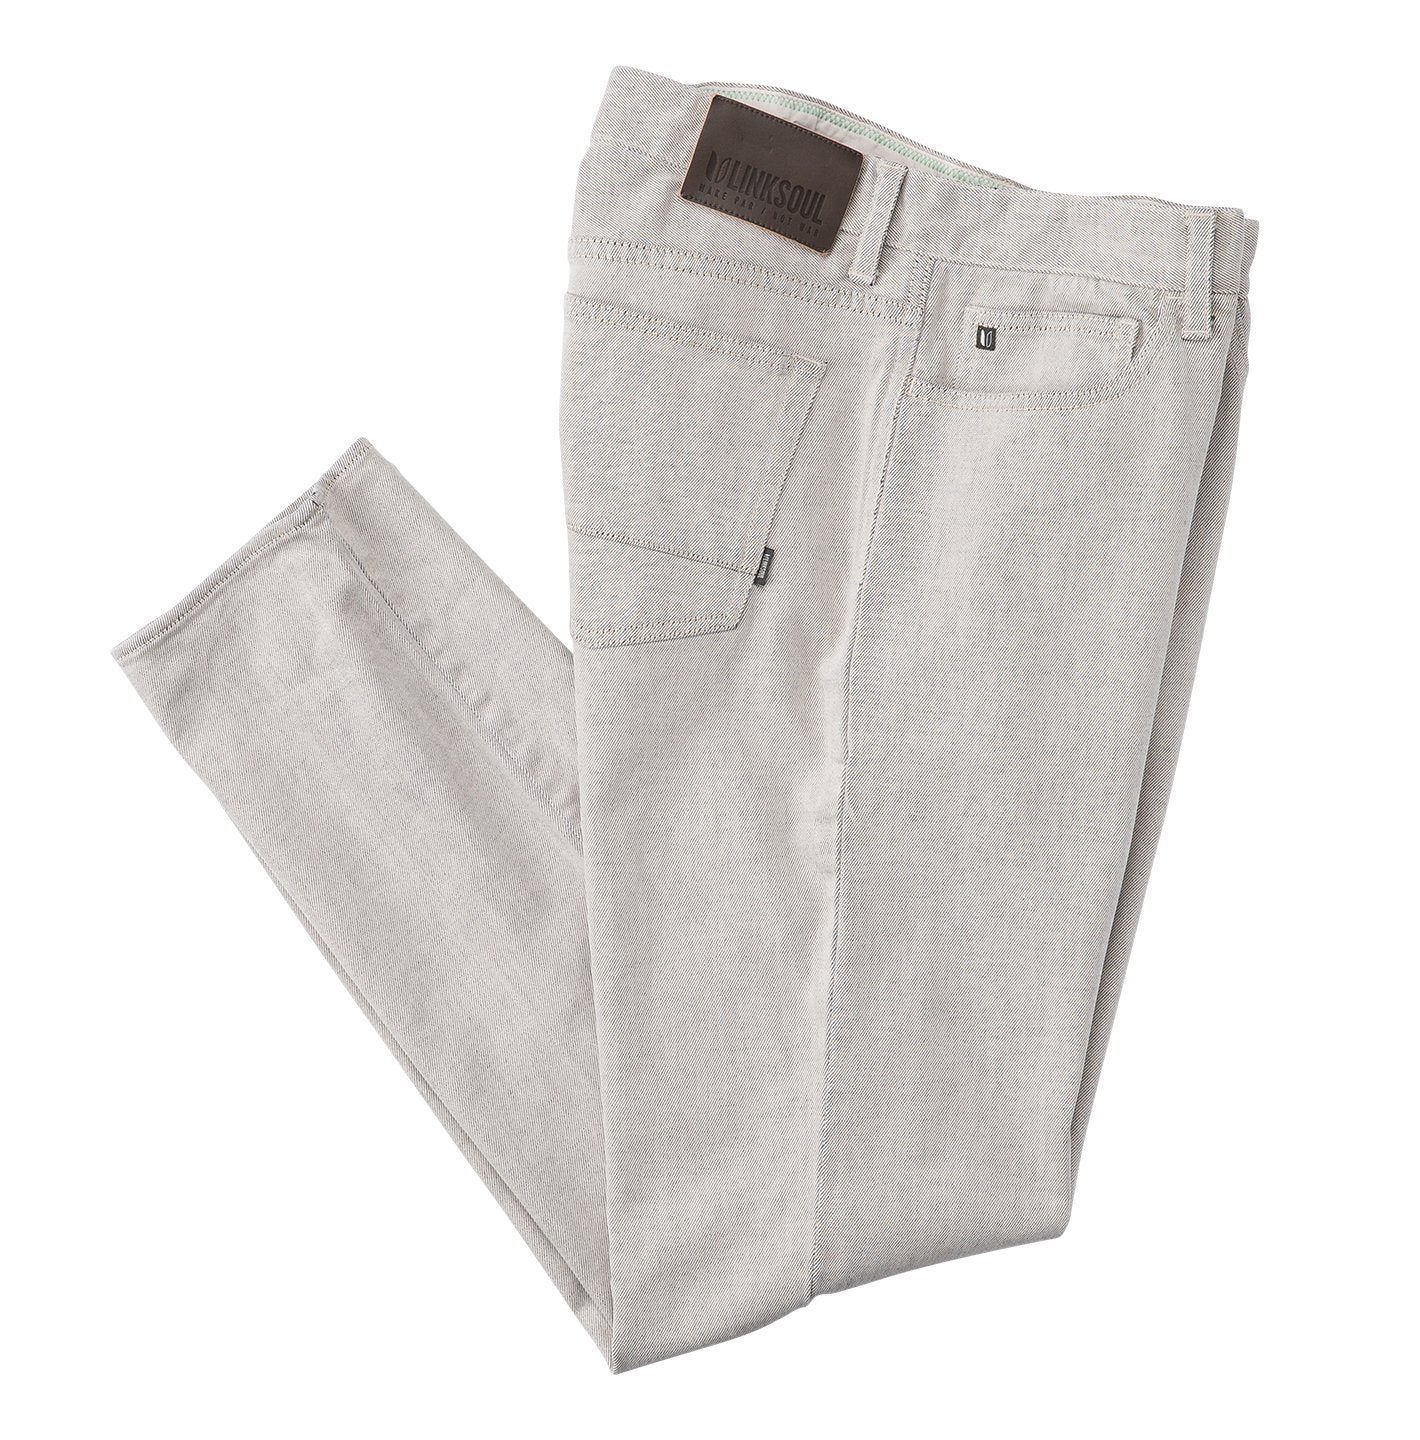 Men Slim fit Khaki Colored Jeans 30W X 30L at Amazon Men's Clothing store